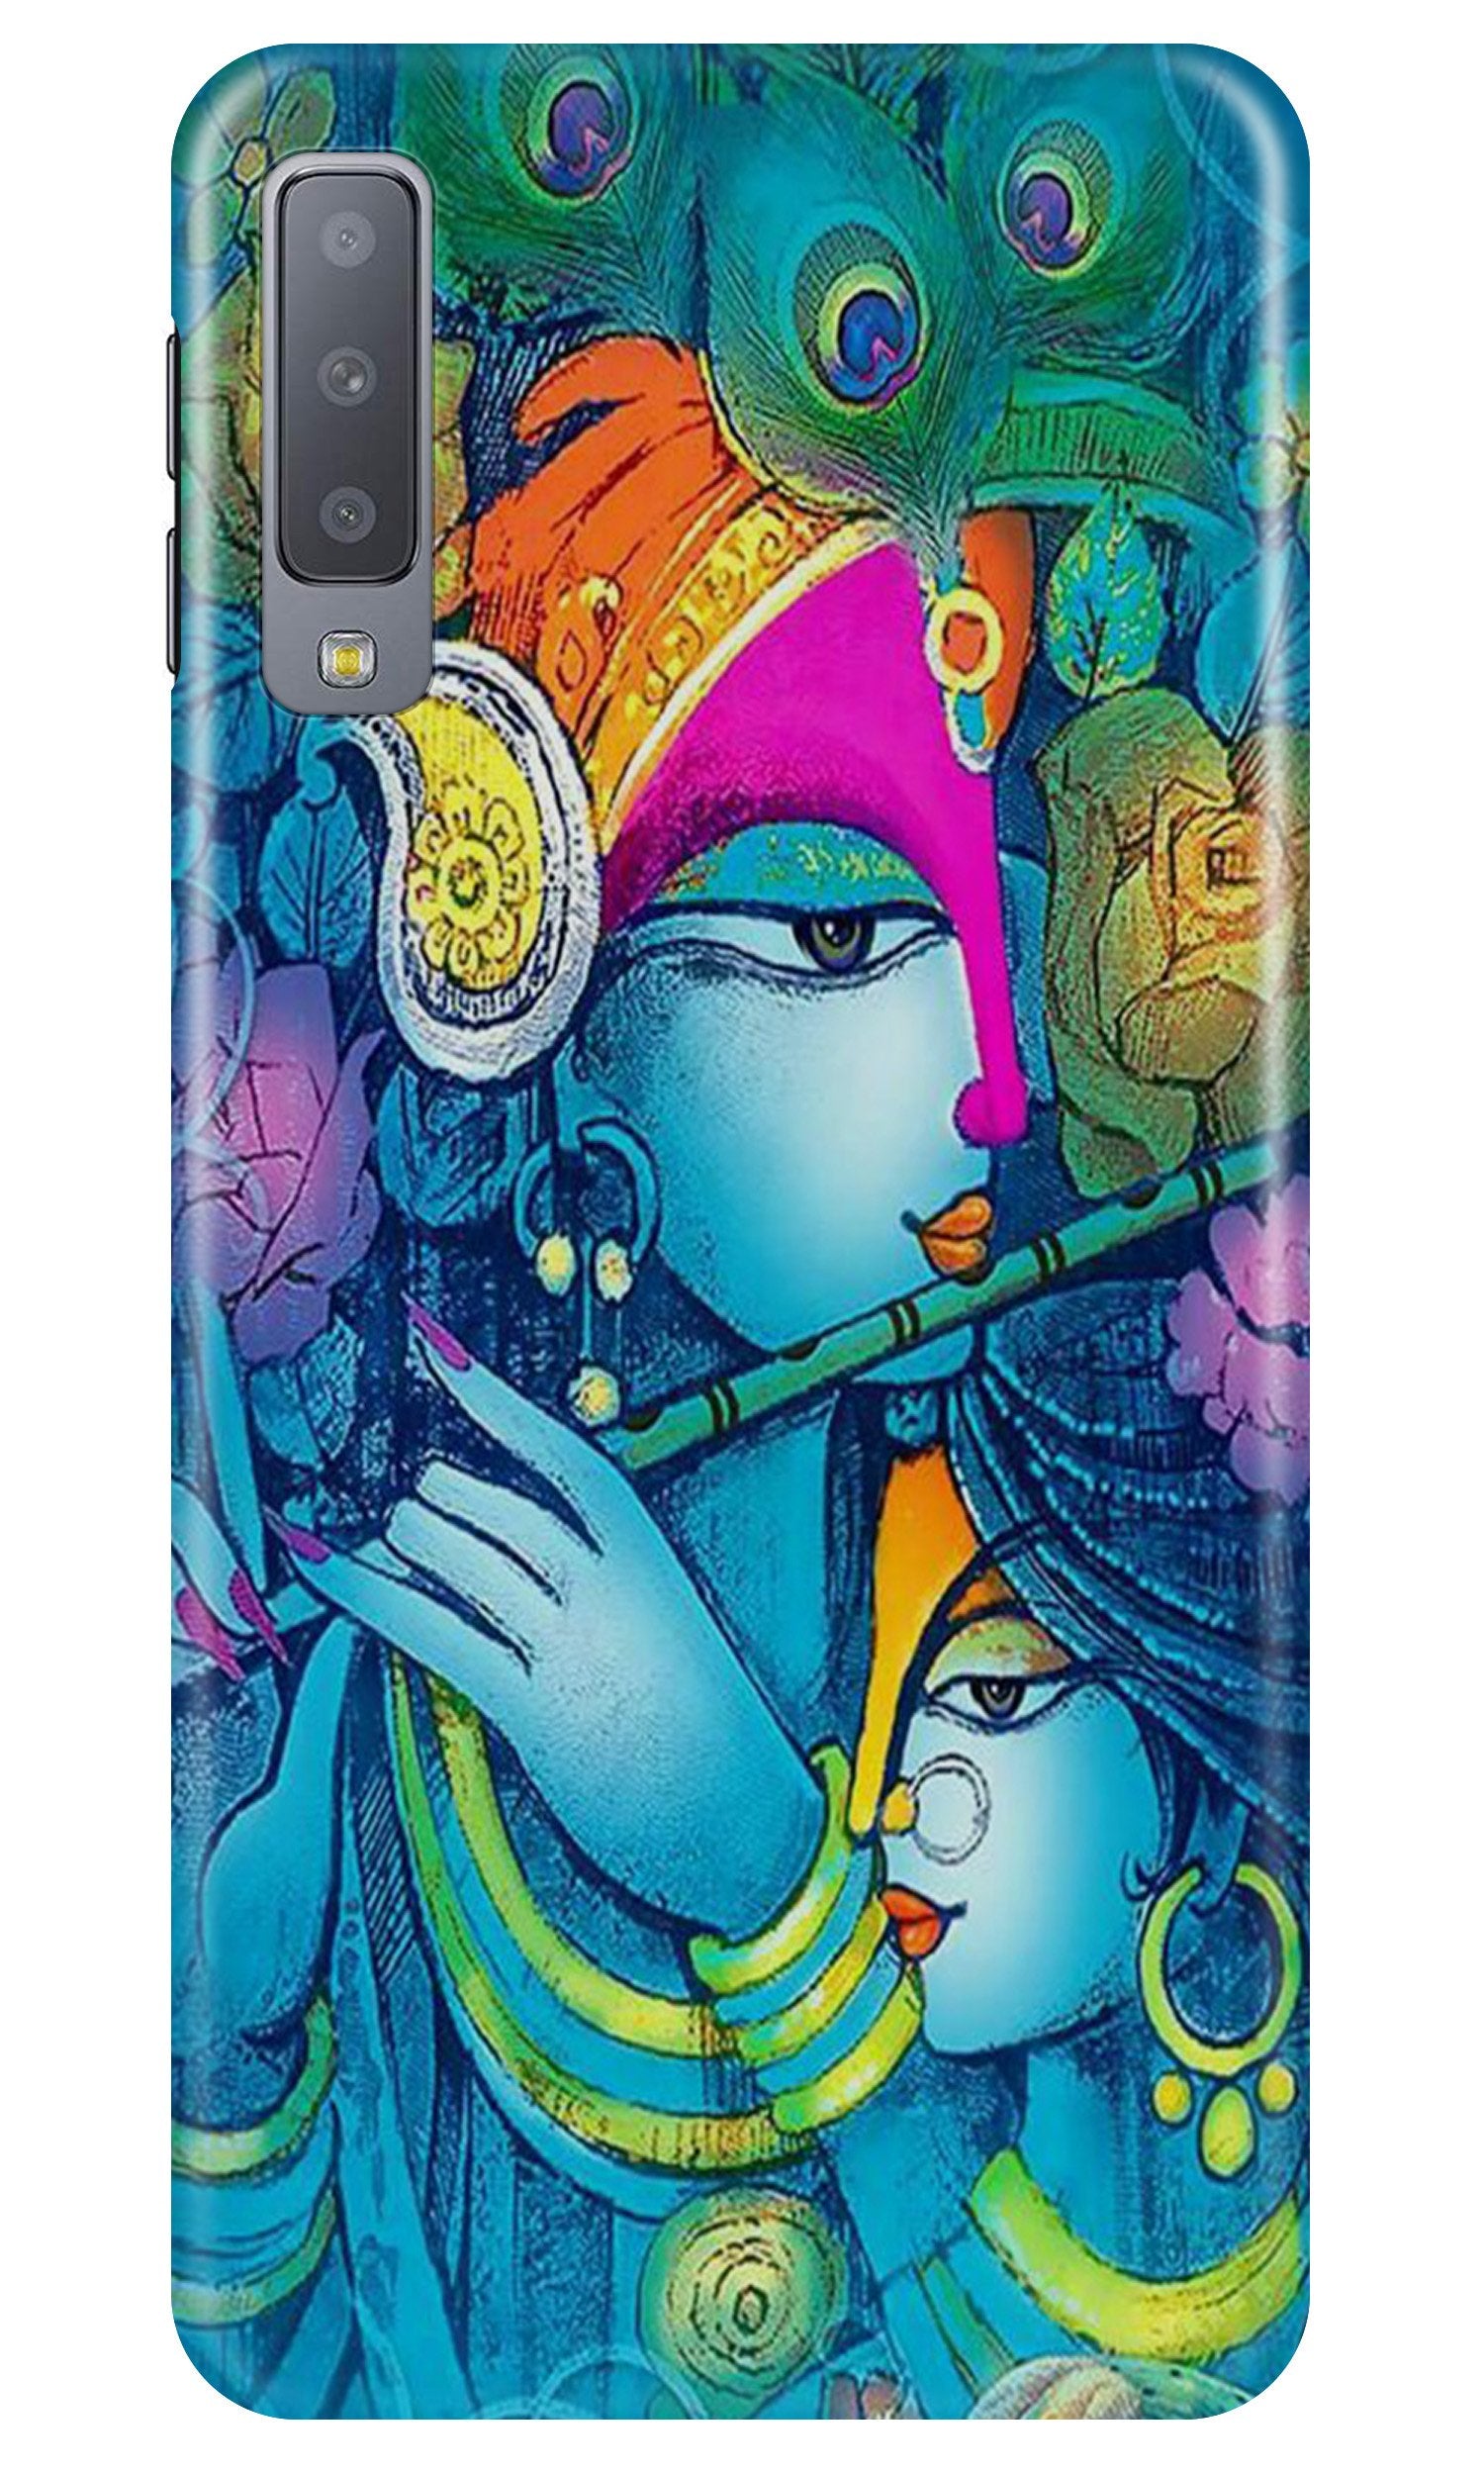 Radha Krishna Case for Samung Galaxy A70s (Design No. 288)